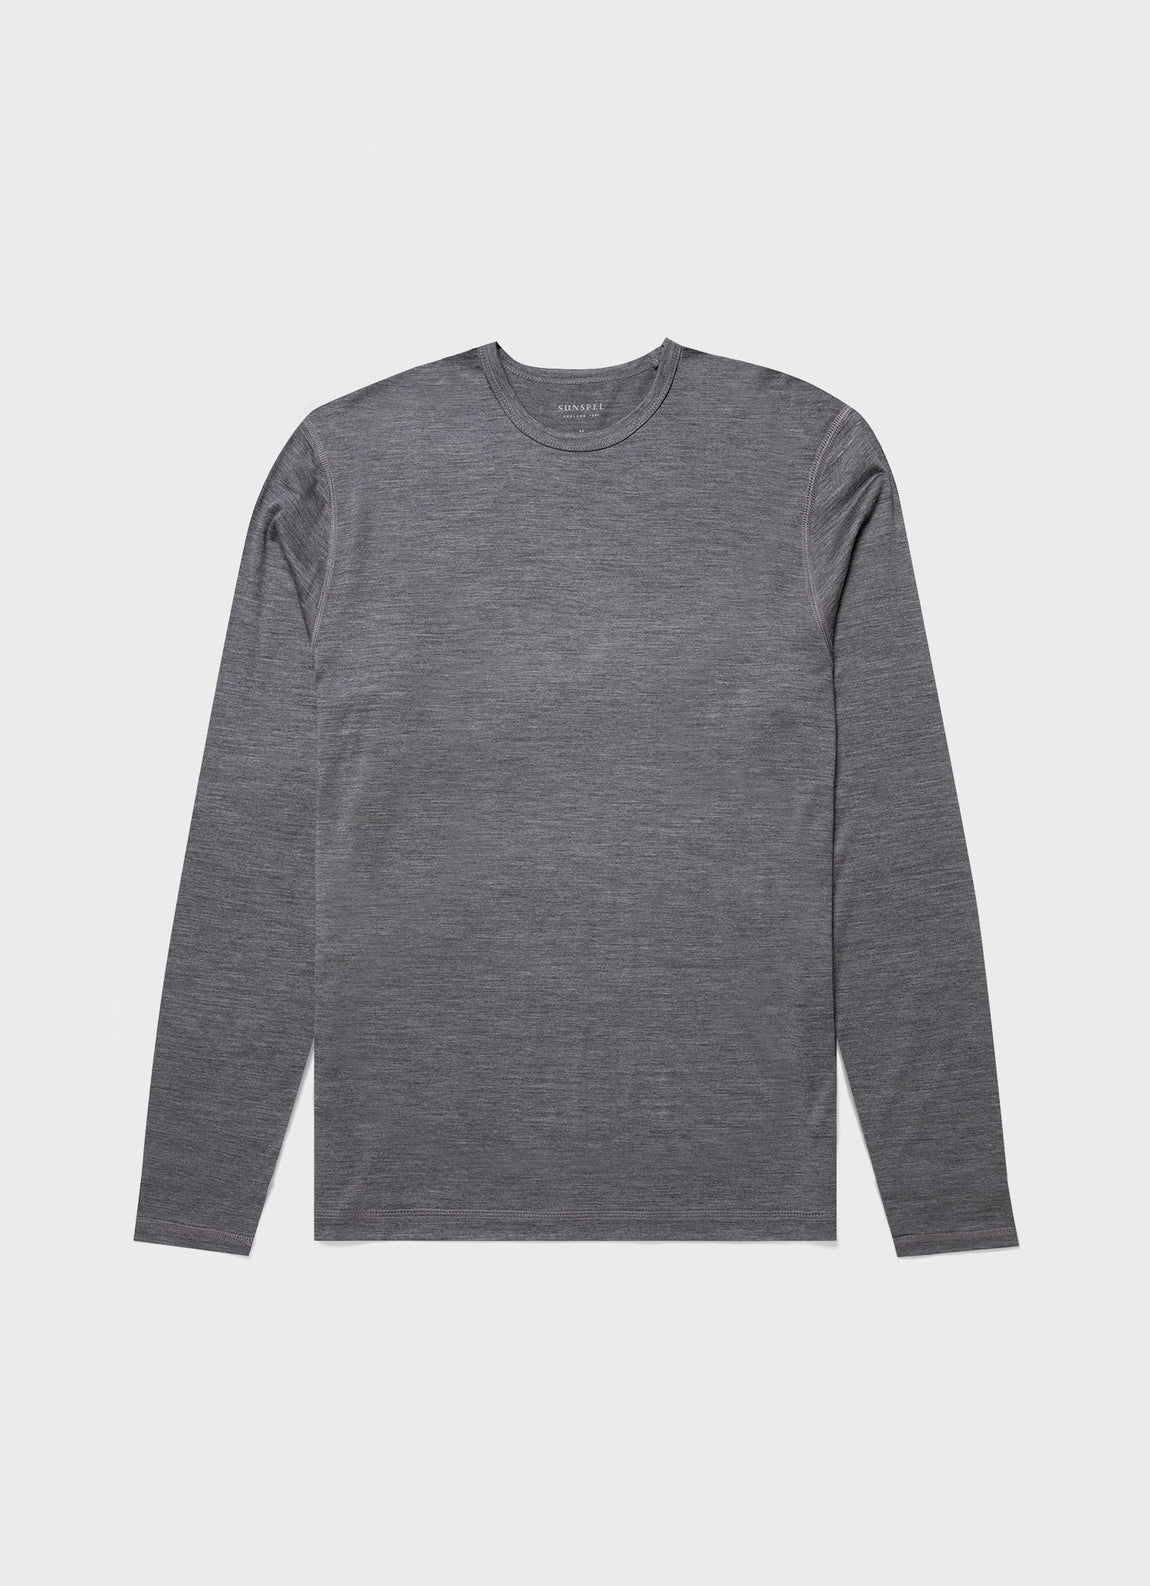 Solid Grey Long Sleeve Shirt